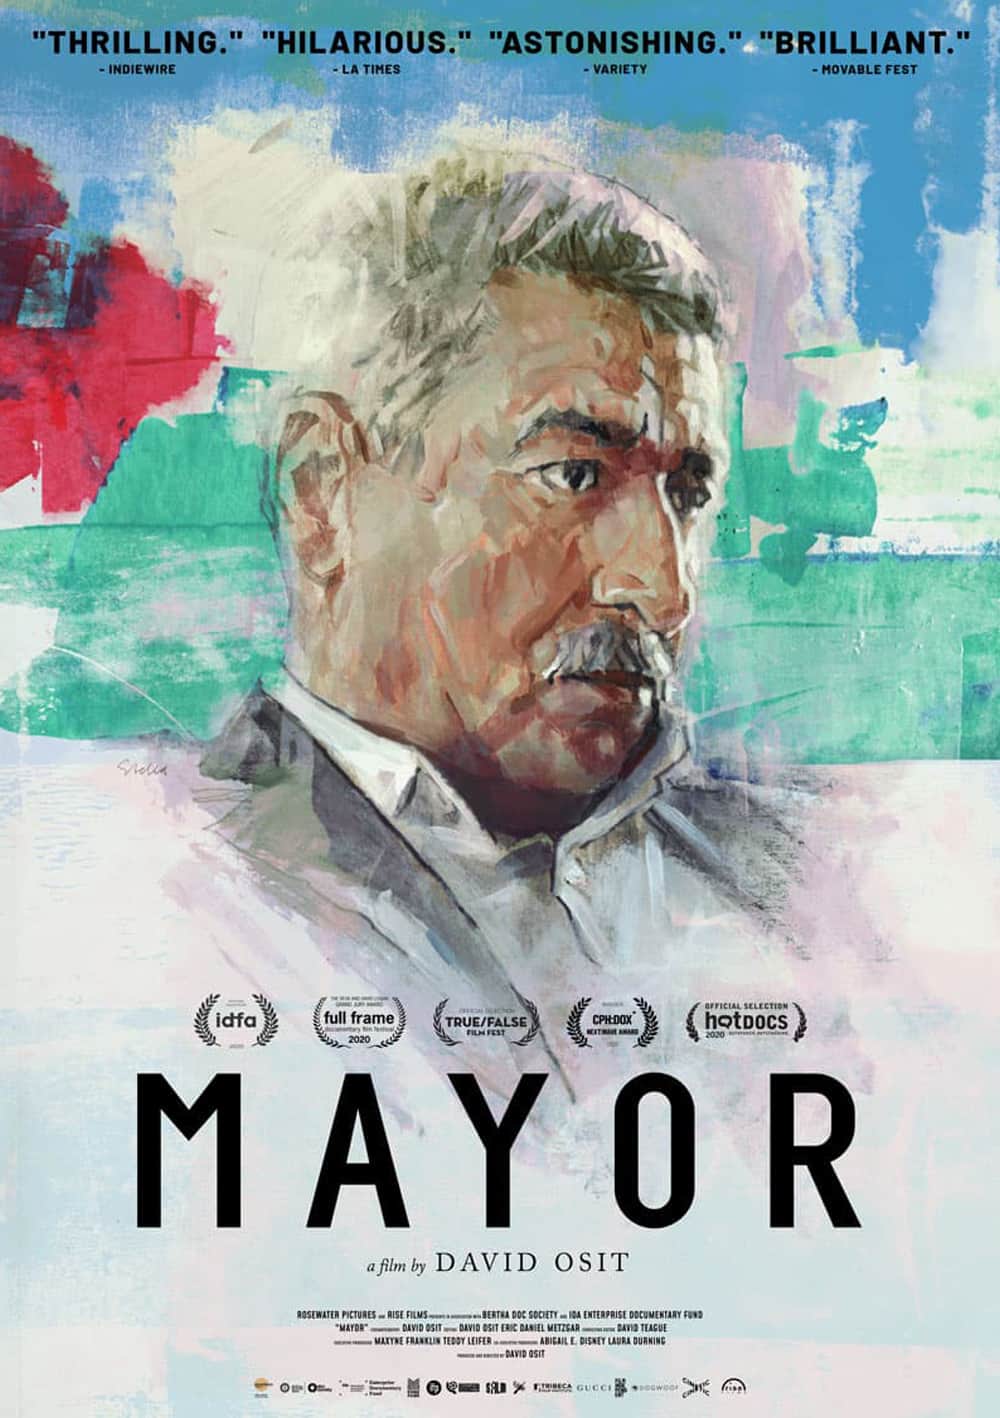 Mayor poster